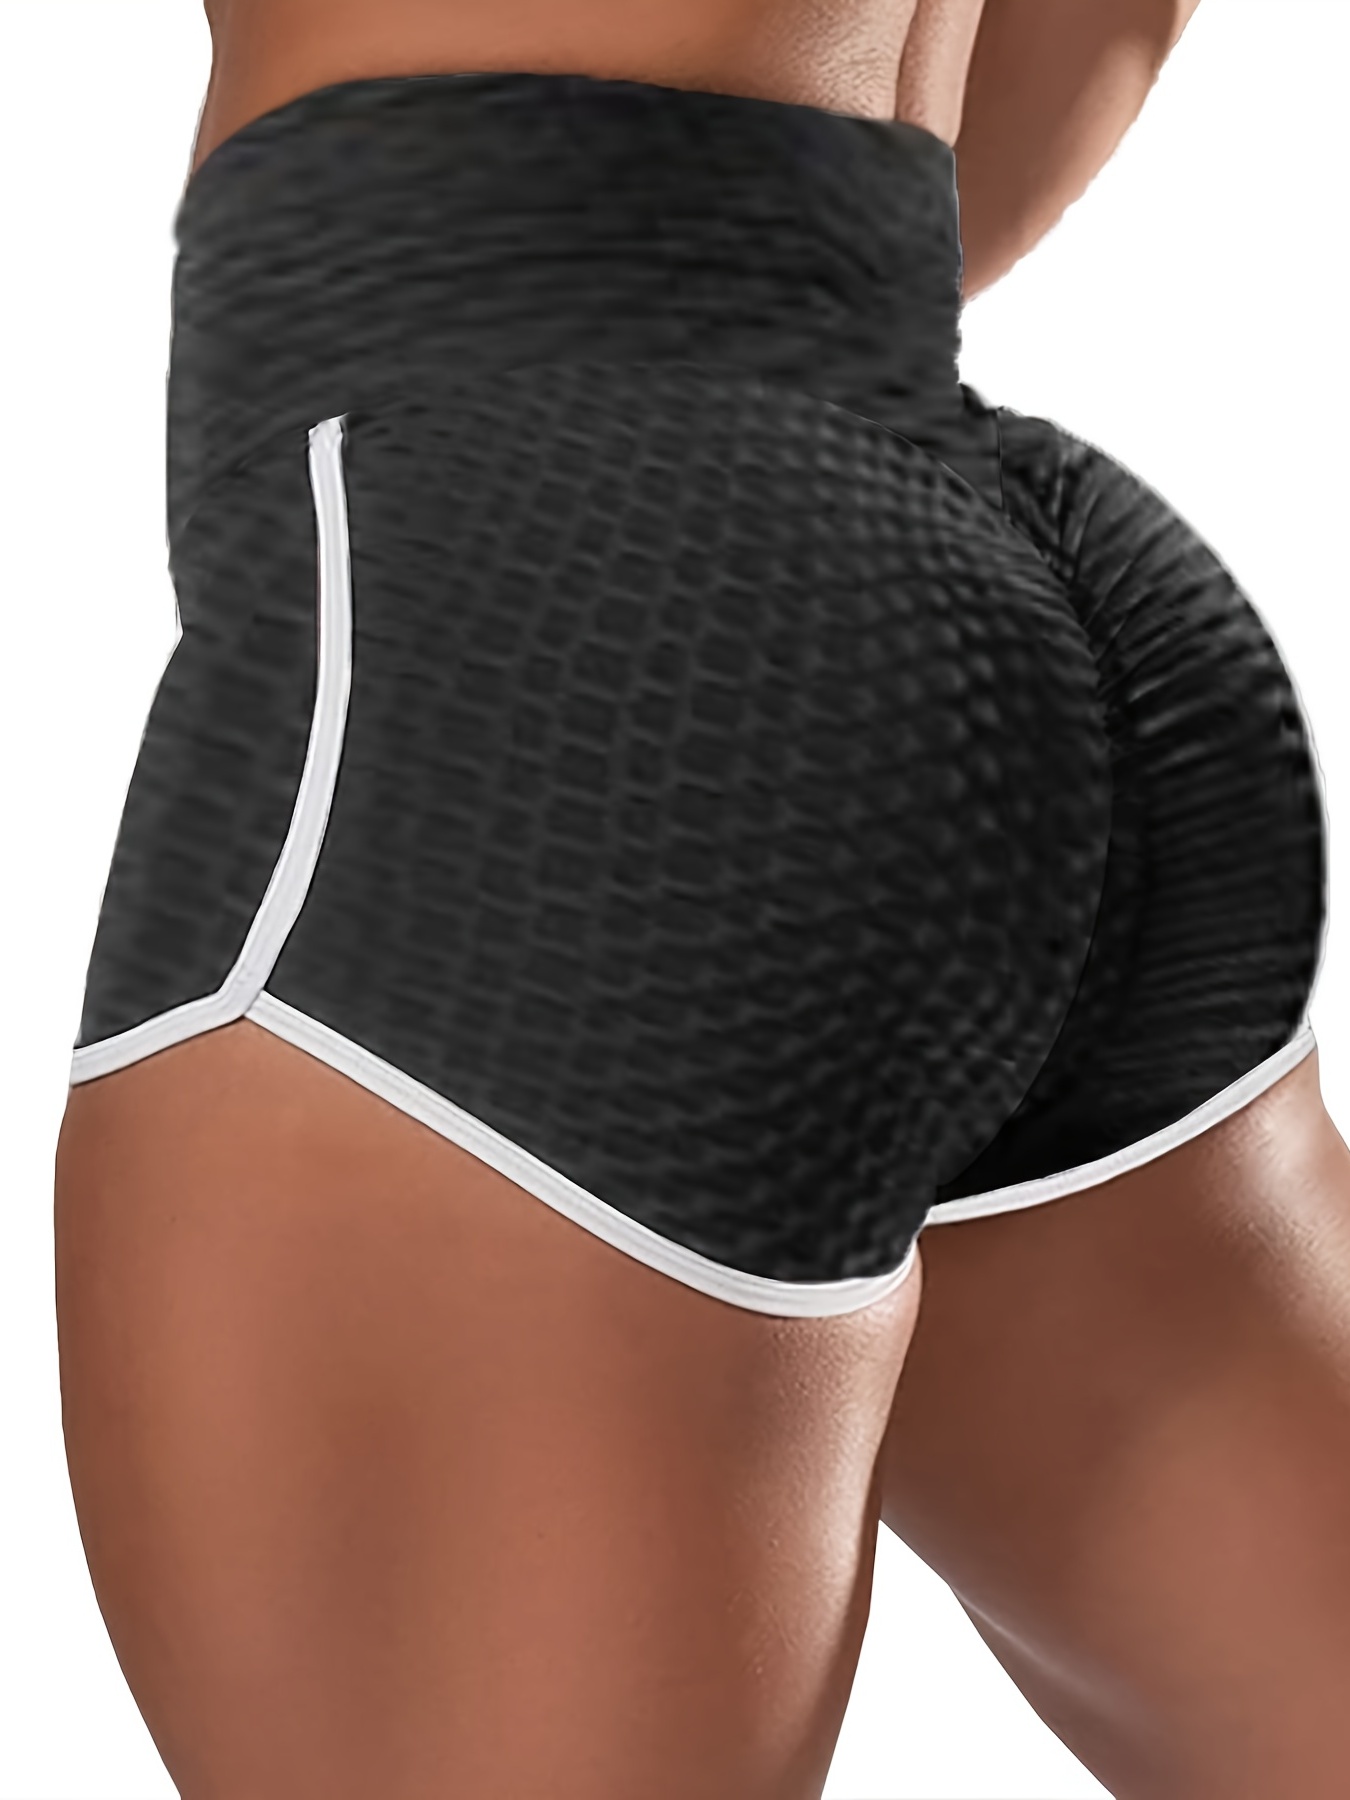 Sexy Workout Shorts 